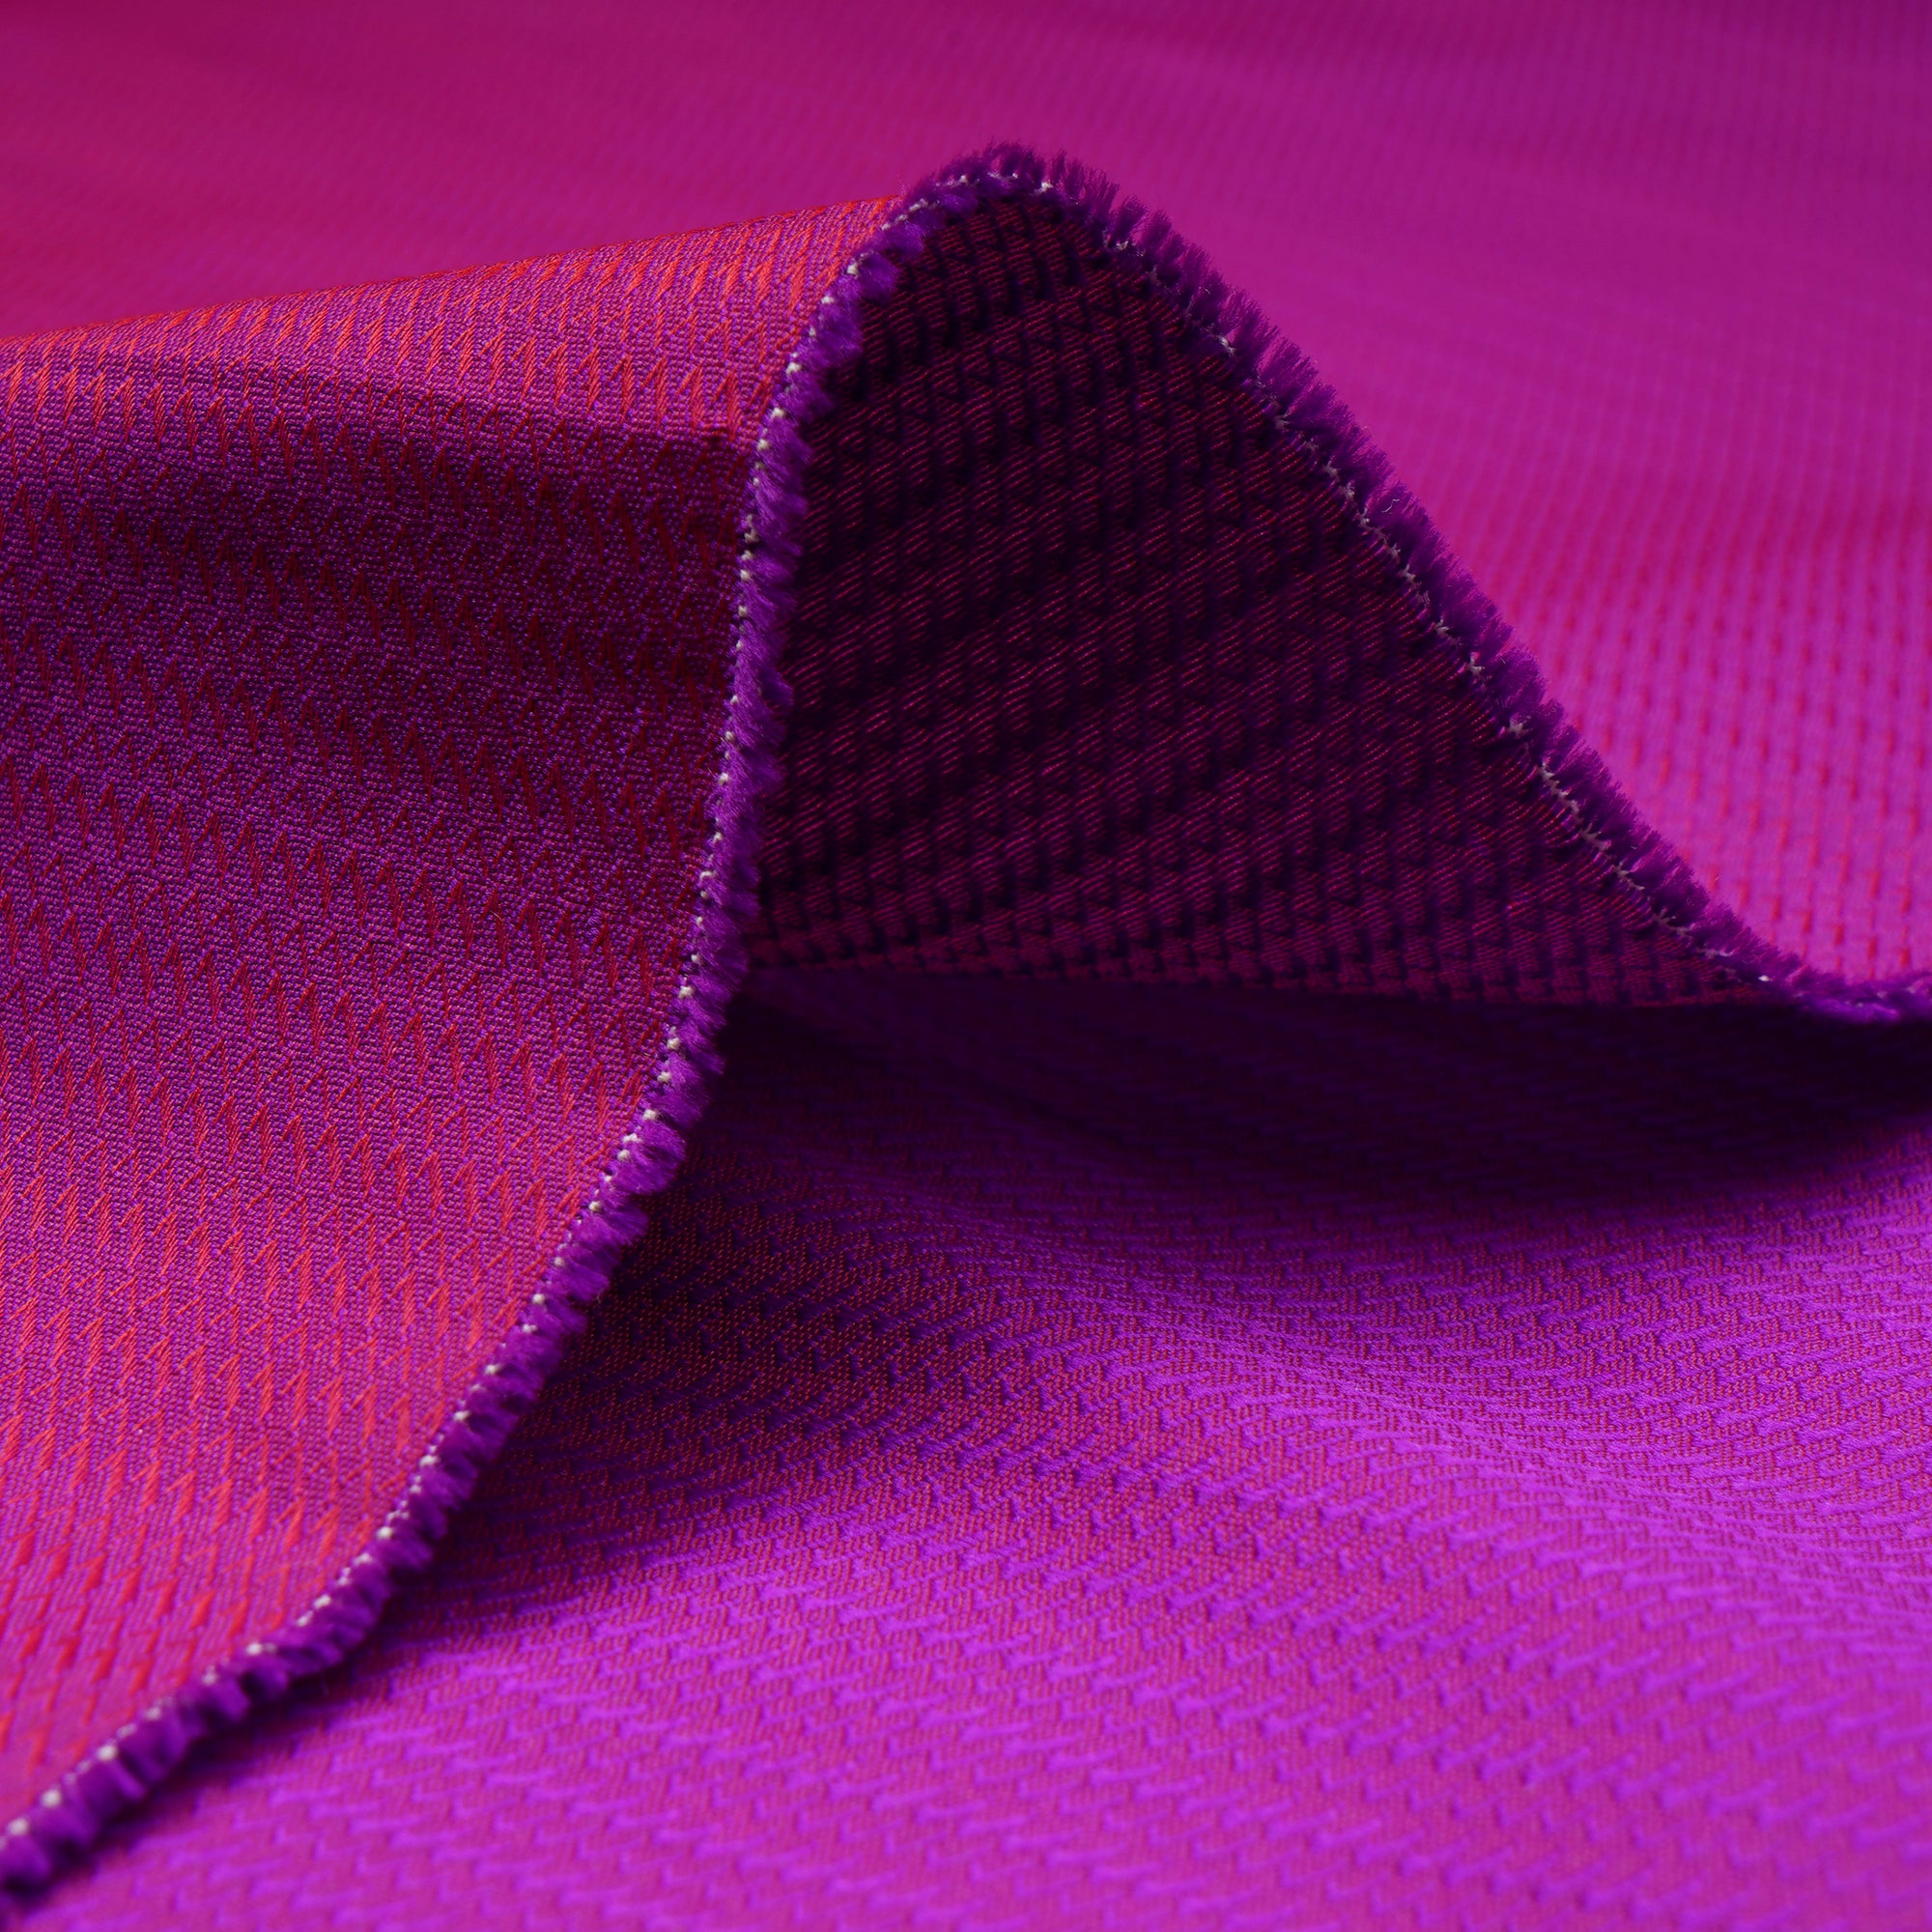 Purple Color Polyester Jacquard Fabric